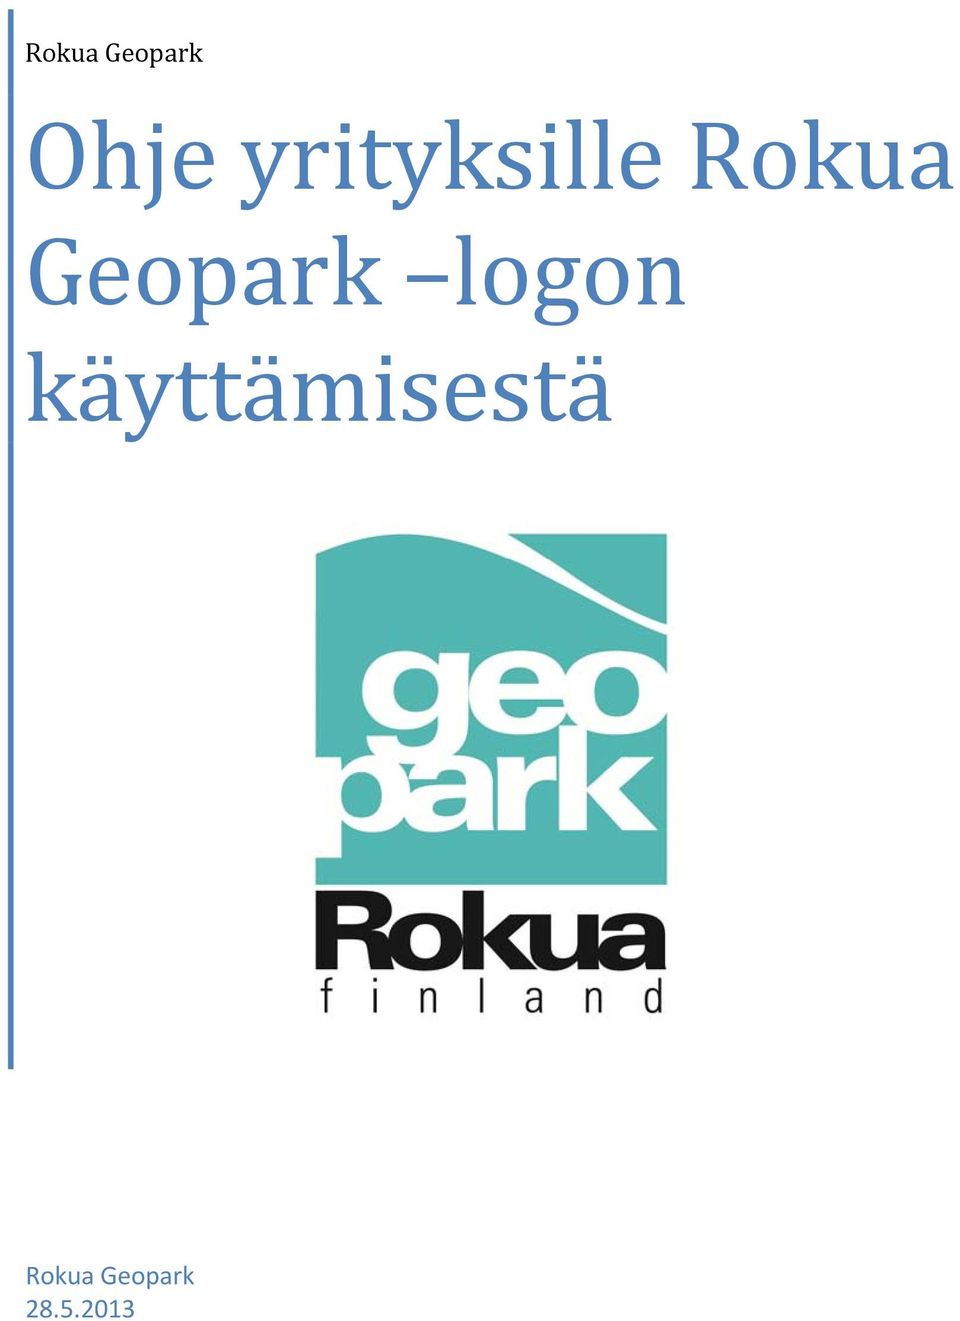 Geopark logon